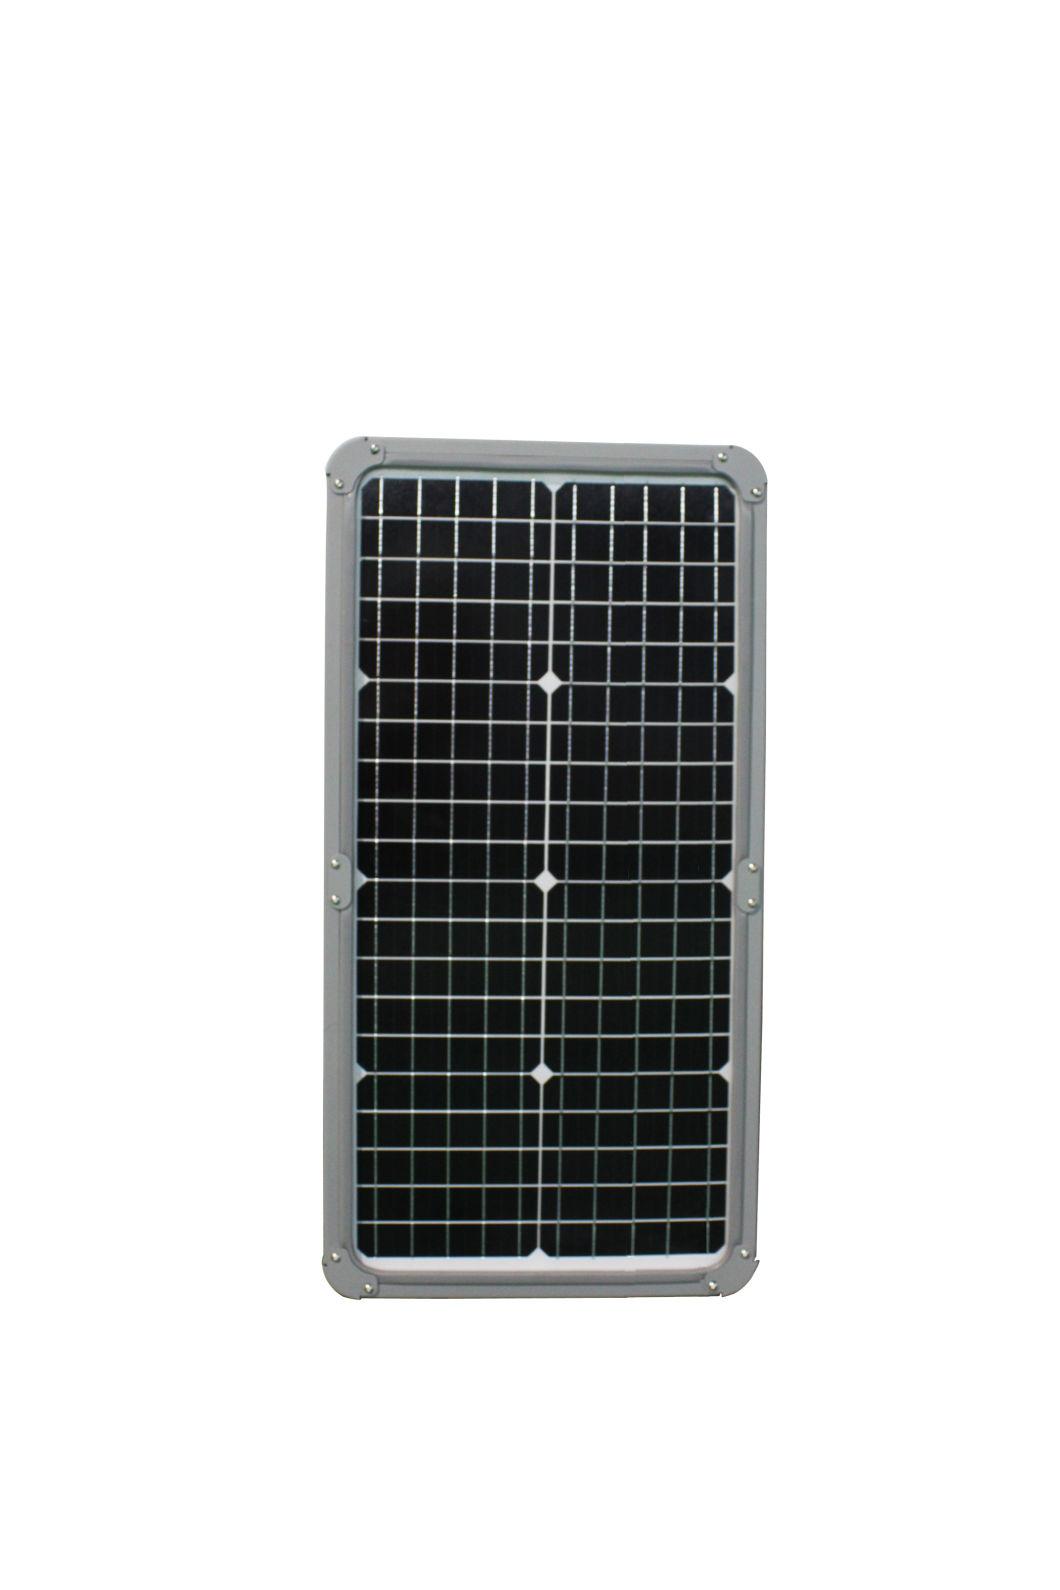 Factory Solar Street Light 60W Power LED Streetlight Outdoor Price for Sales